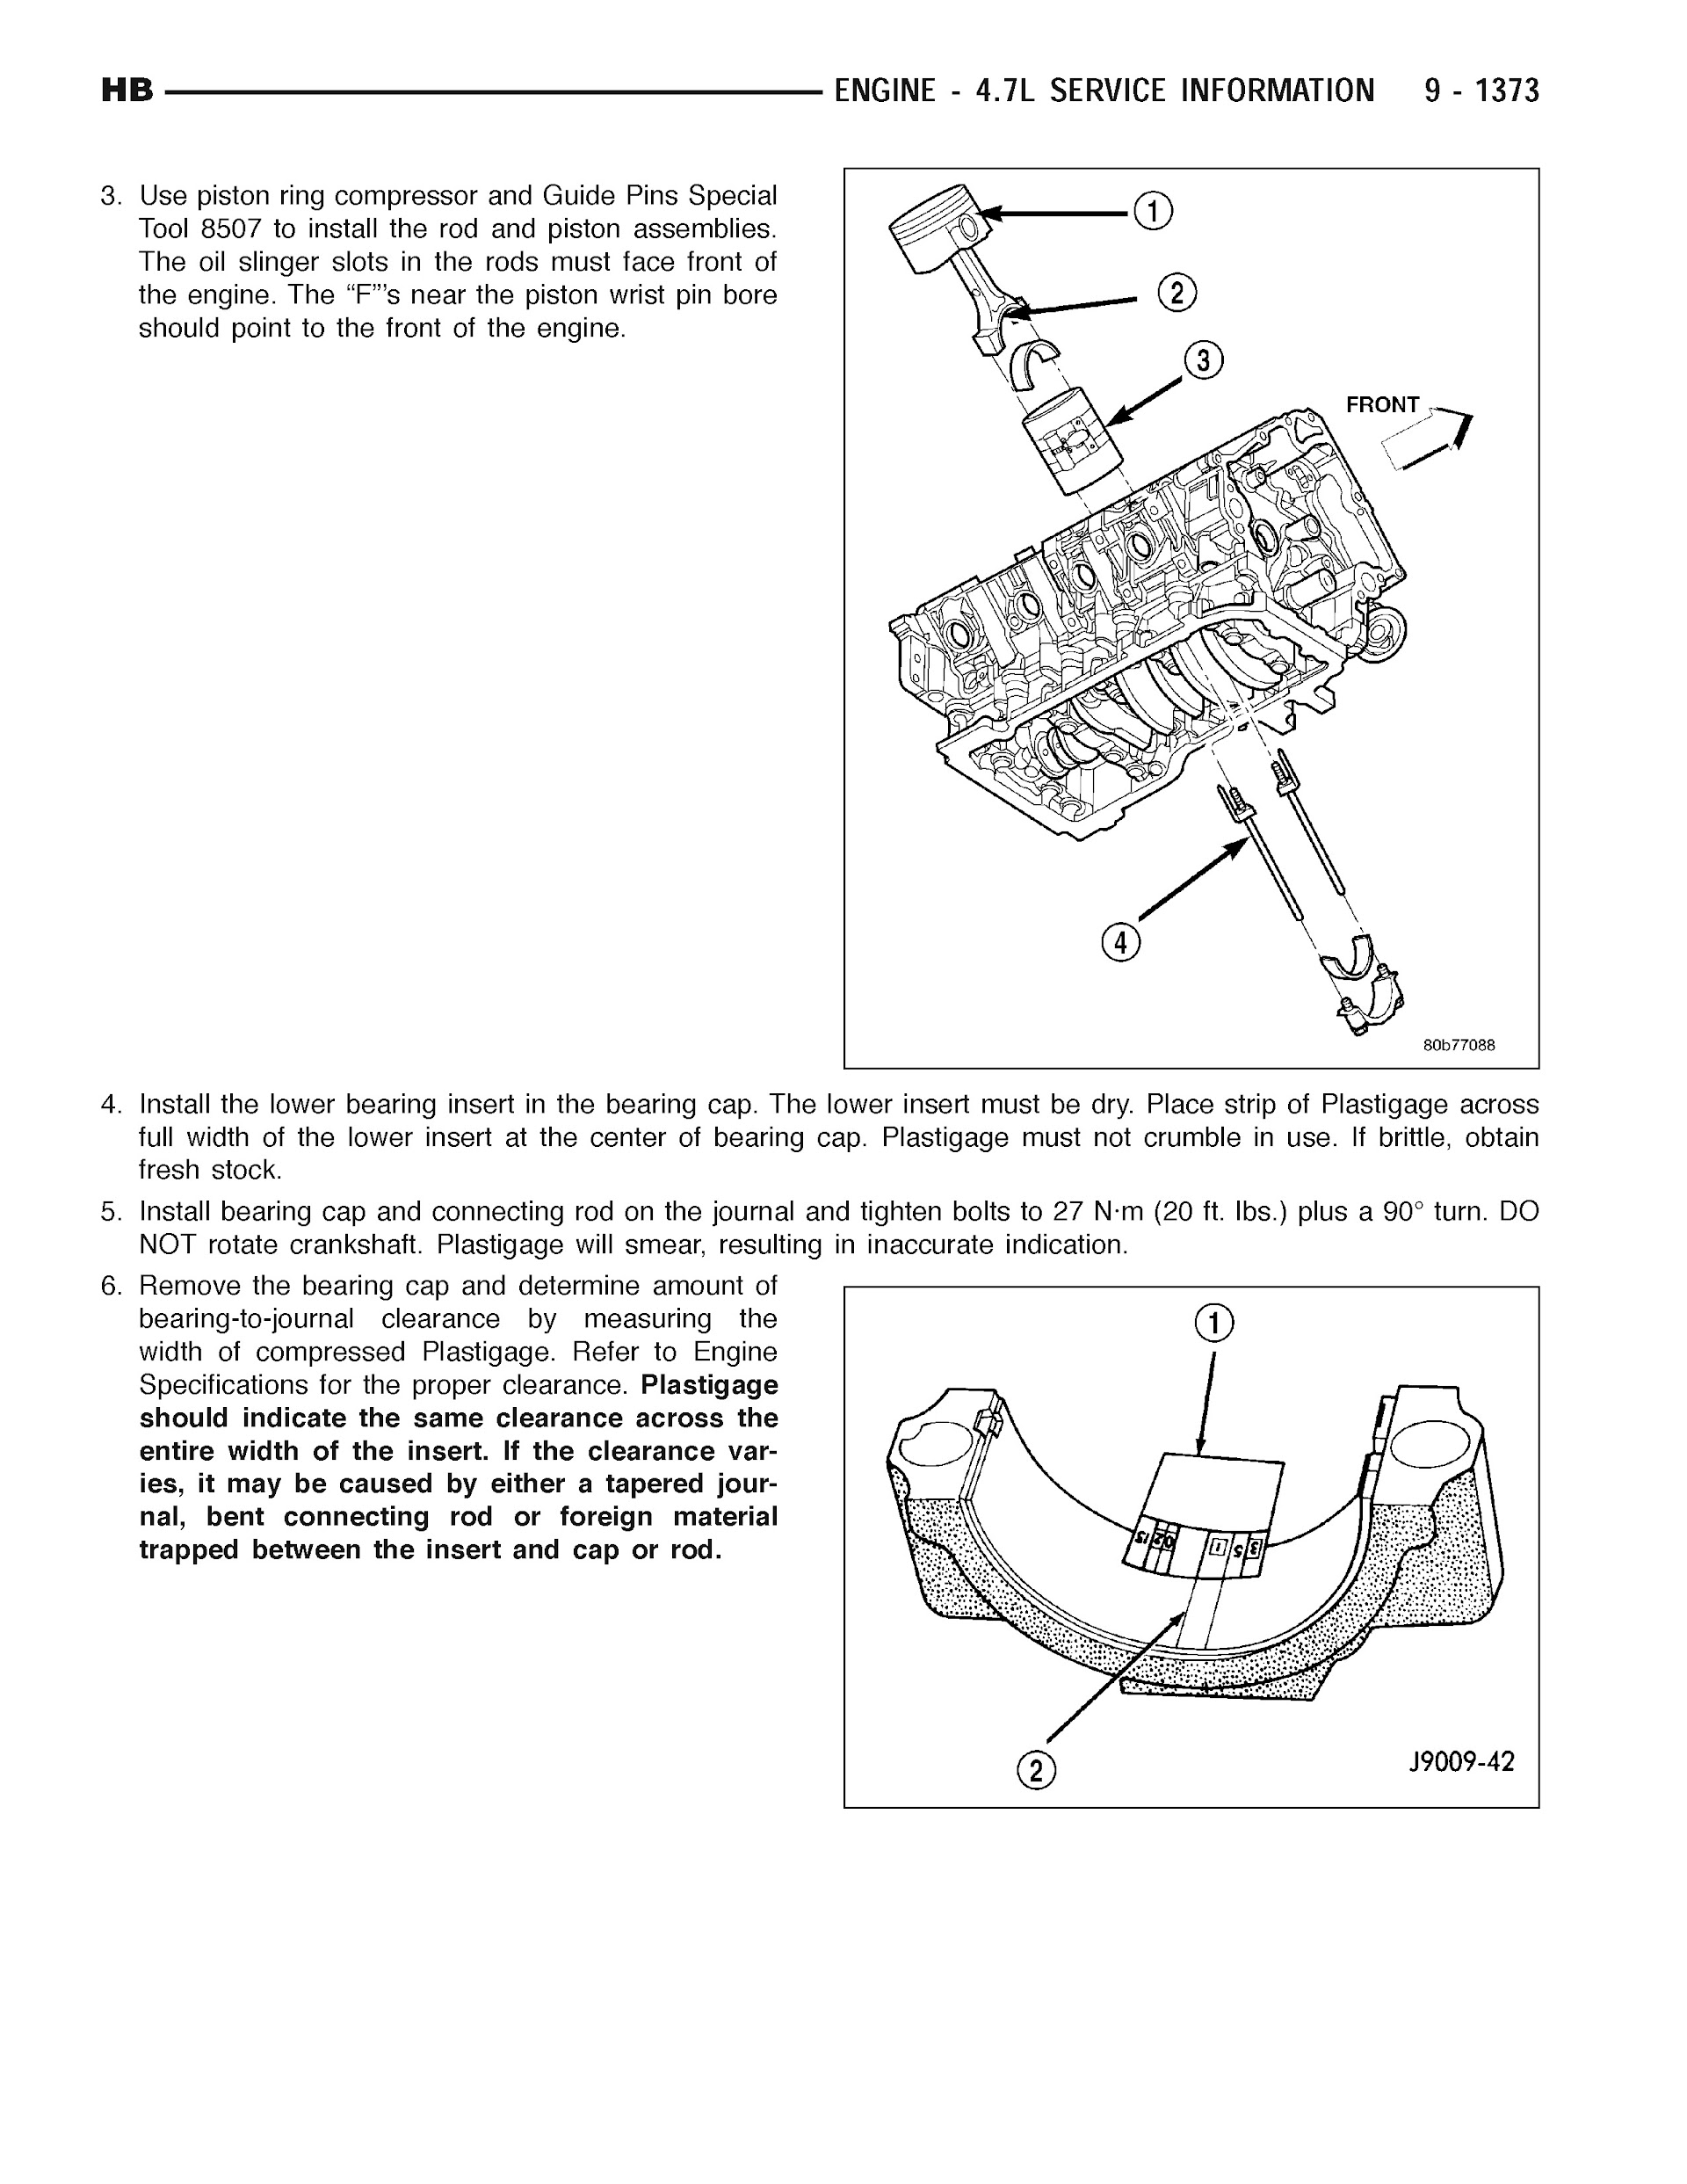 2004-2006 Dodge Durango Repair Manual, Engine 4.7L Service Information